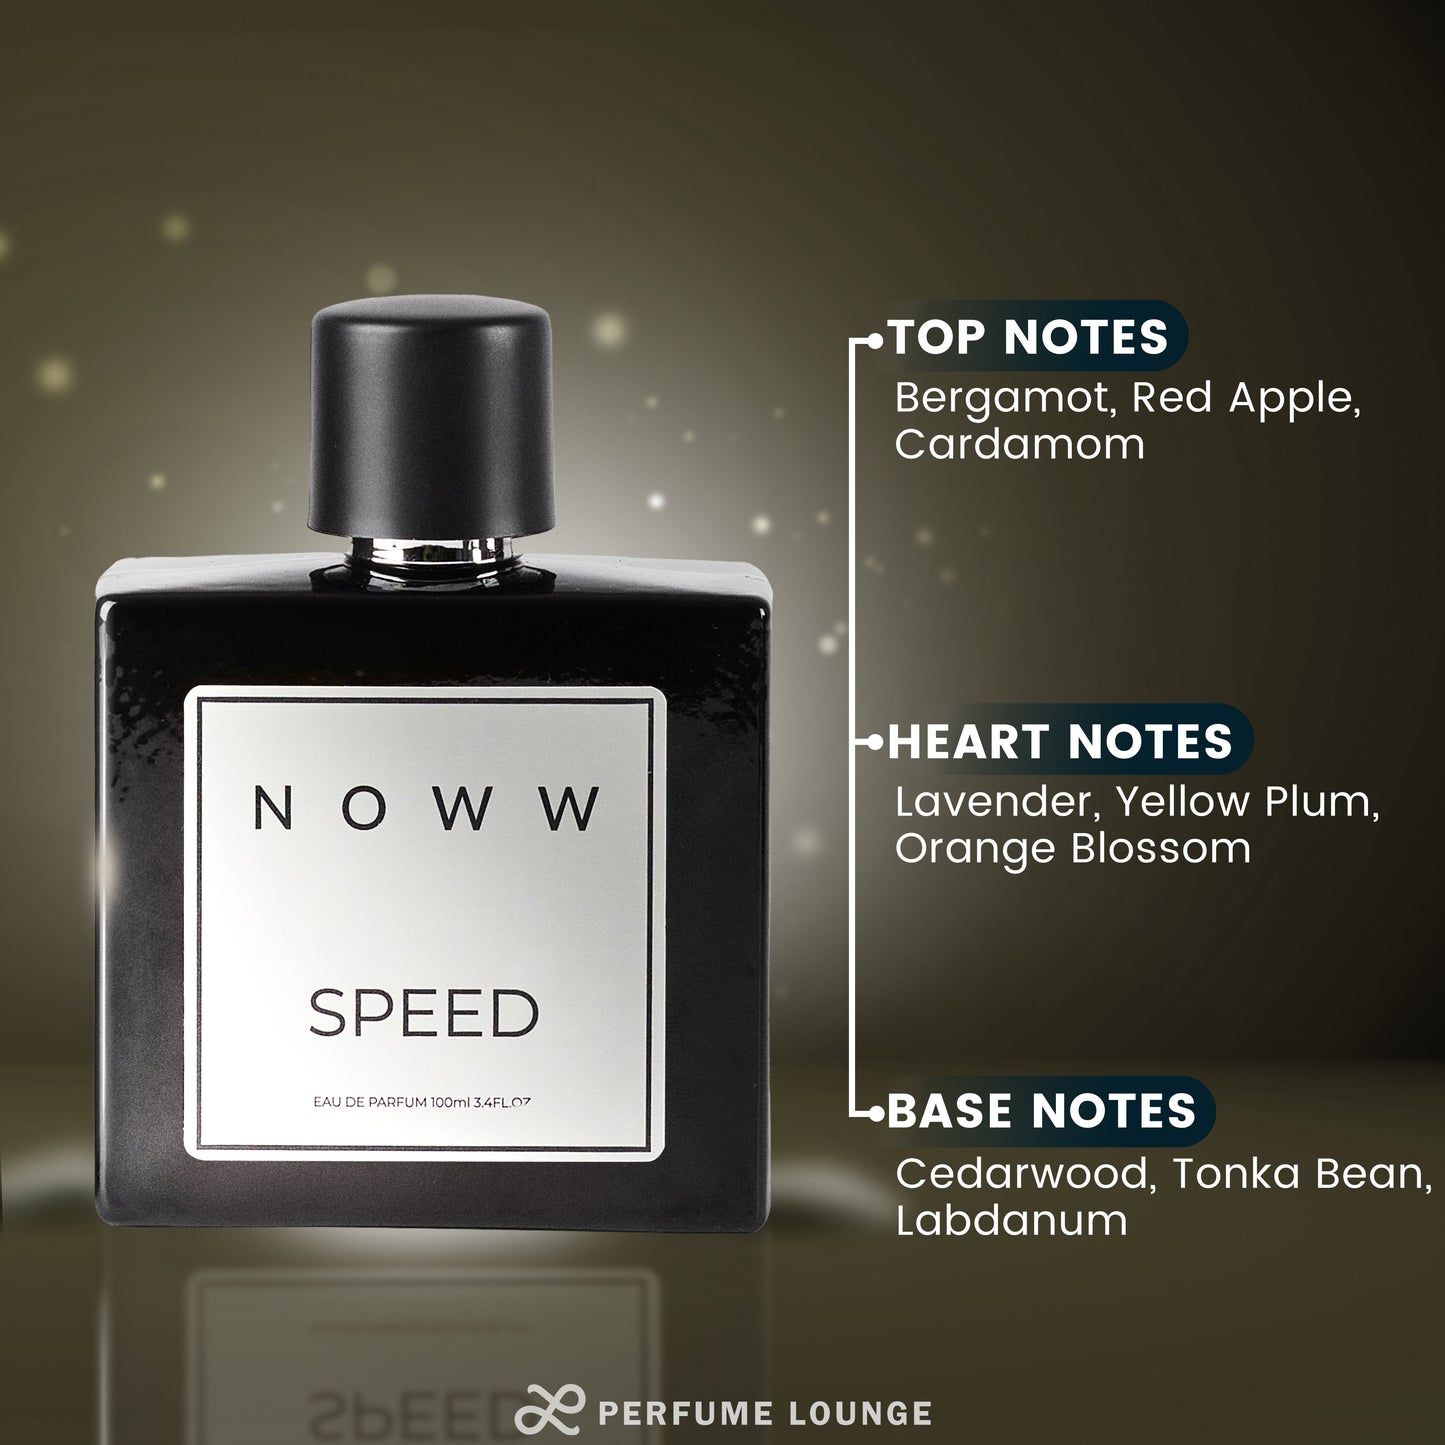 Noww Speed Perfume for Men 100 ml EDP